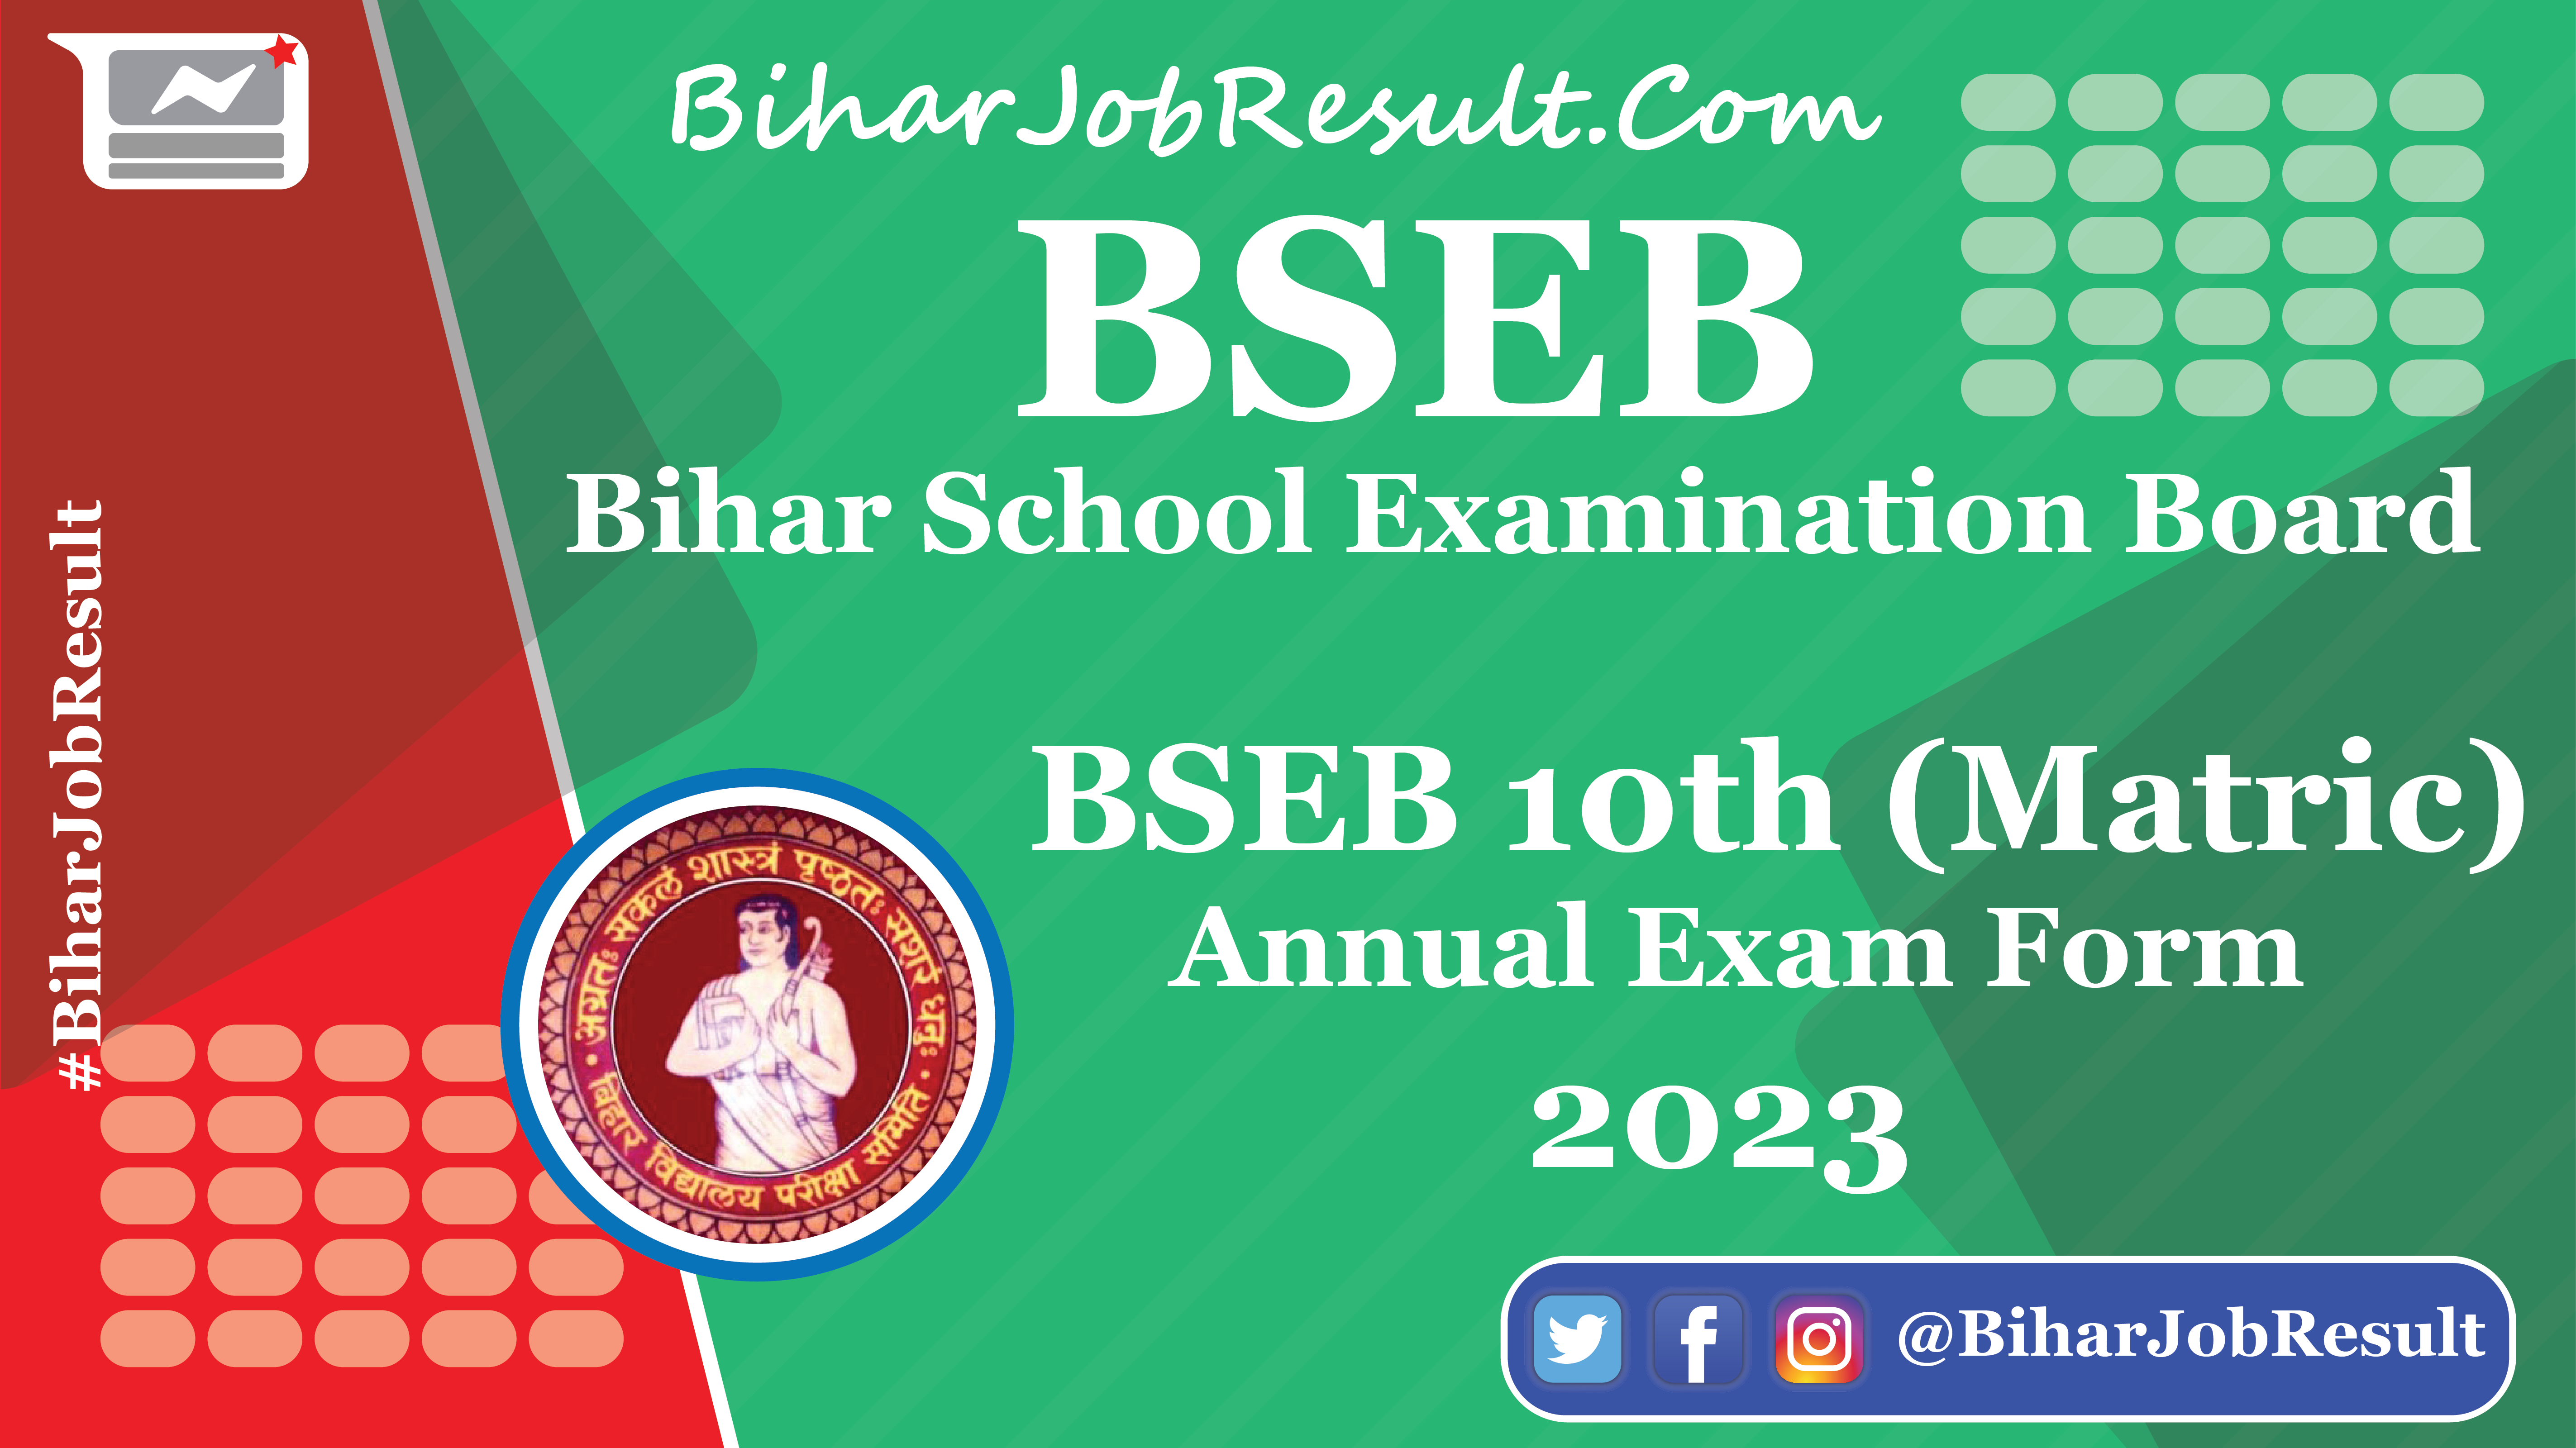 BSEB 10th Annual Exam Form 2023